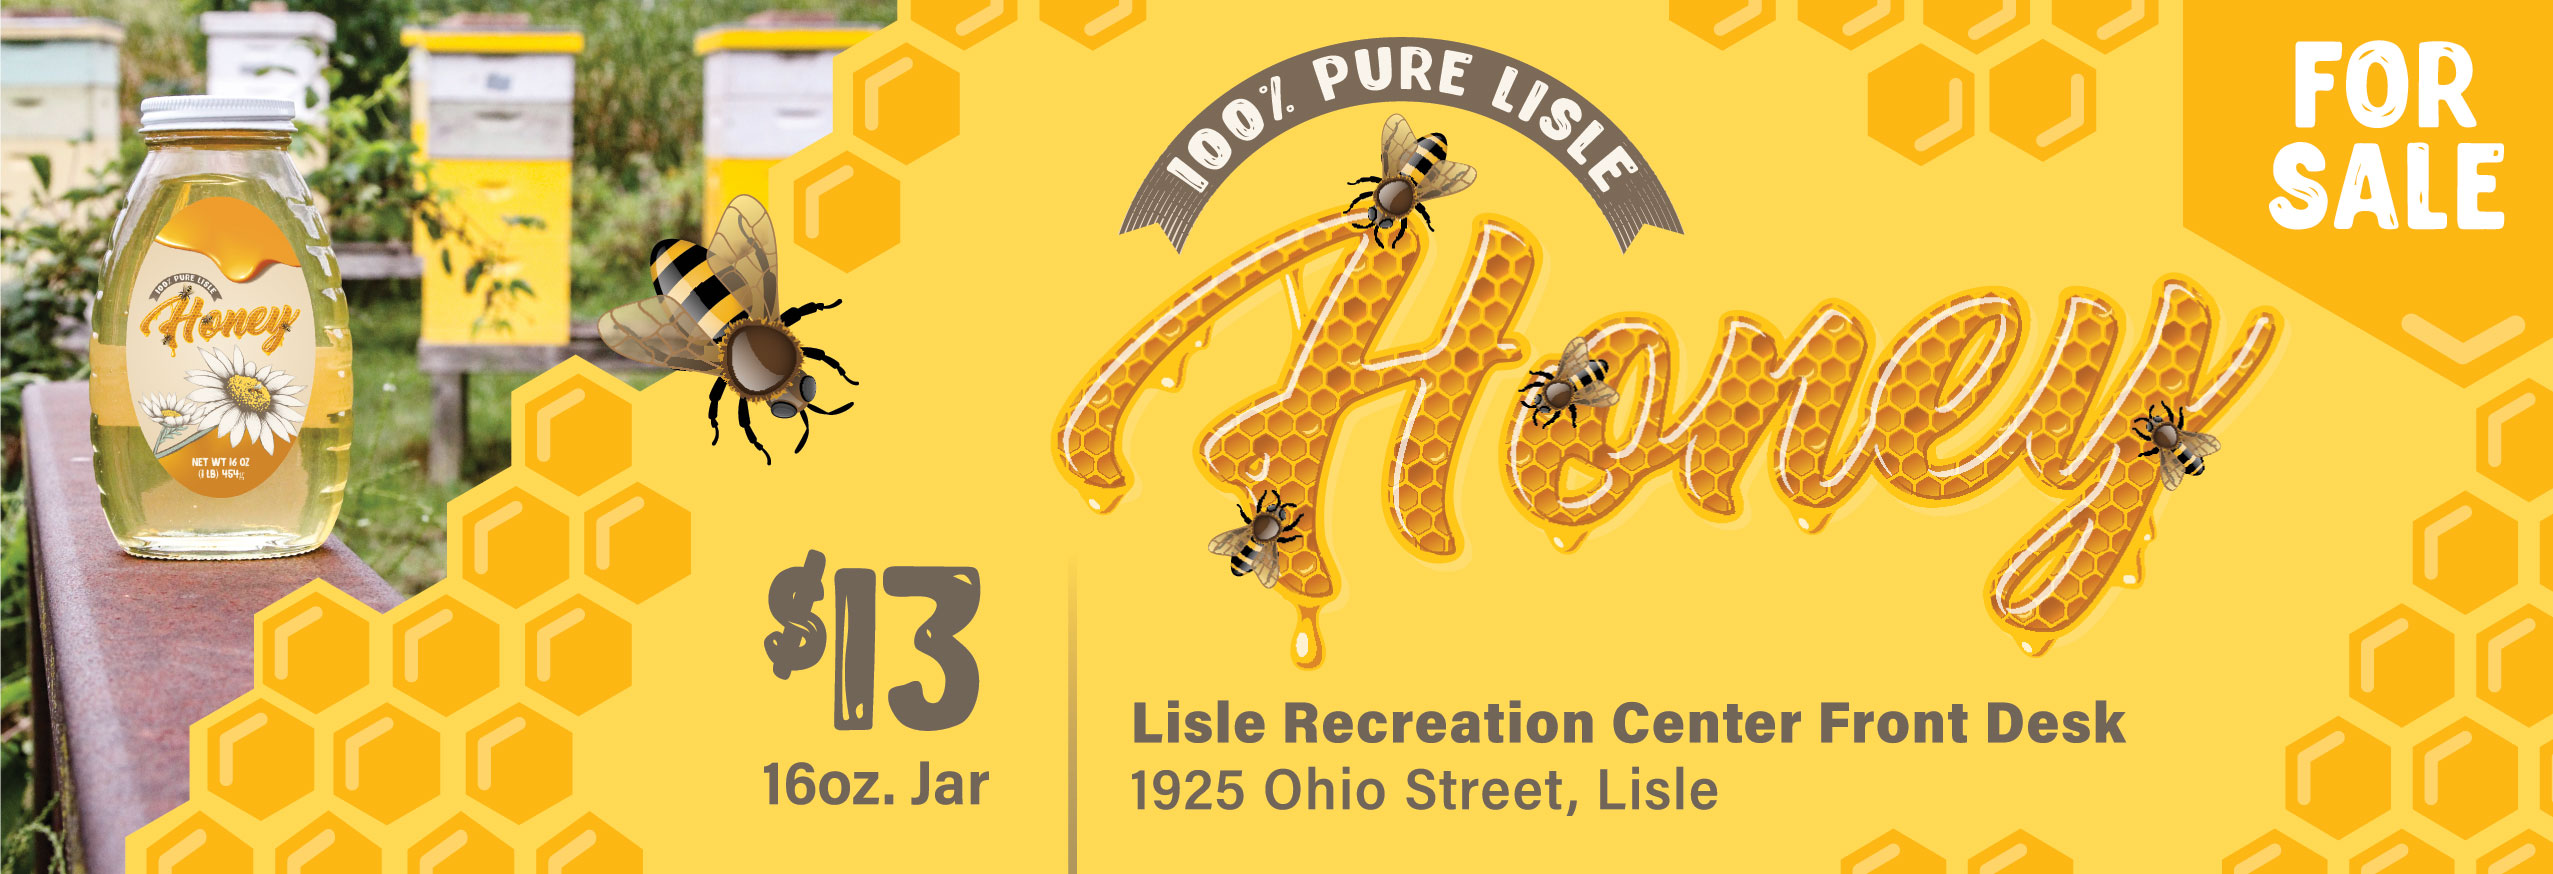 Pure Lisle Honey For Sale